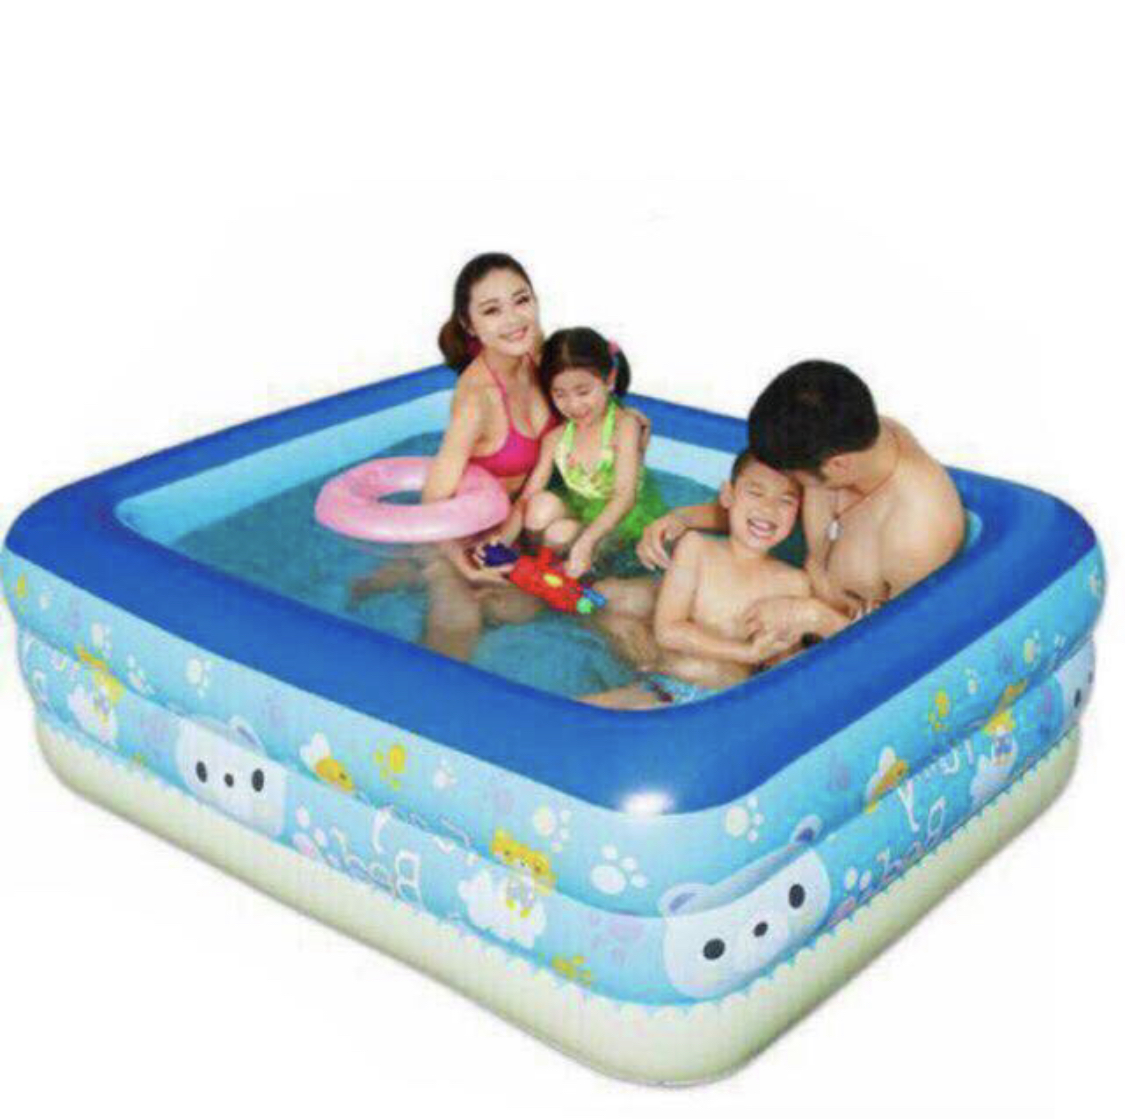 Inflatable pool 2